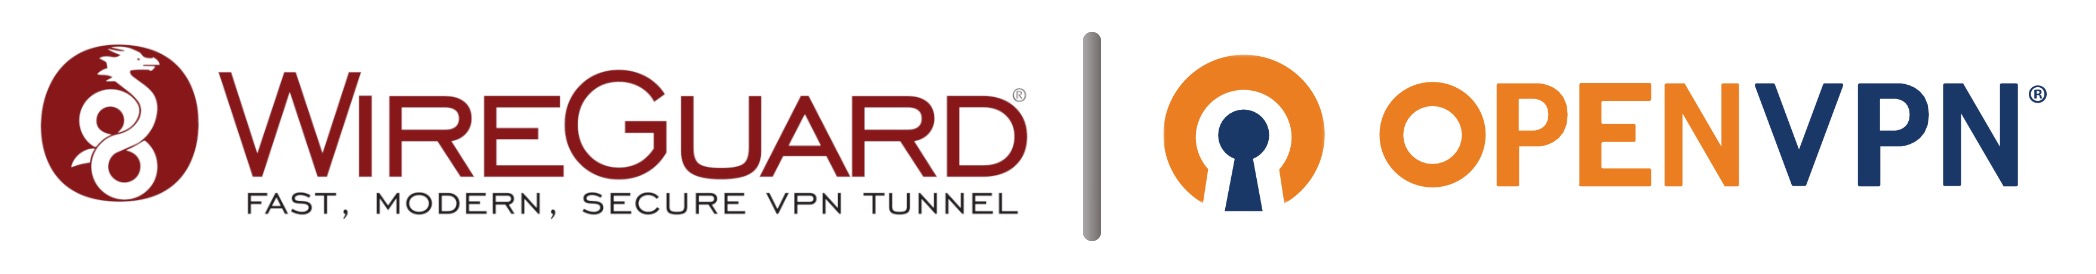 WireGuard + OpenVPN logo